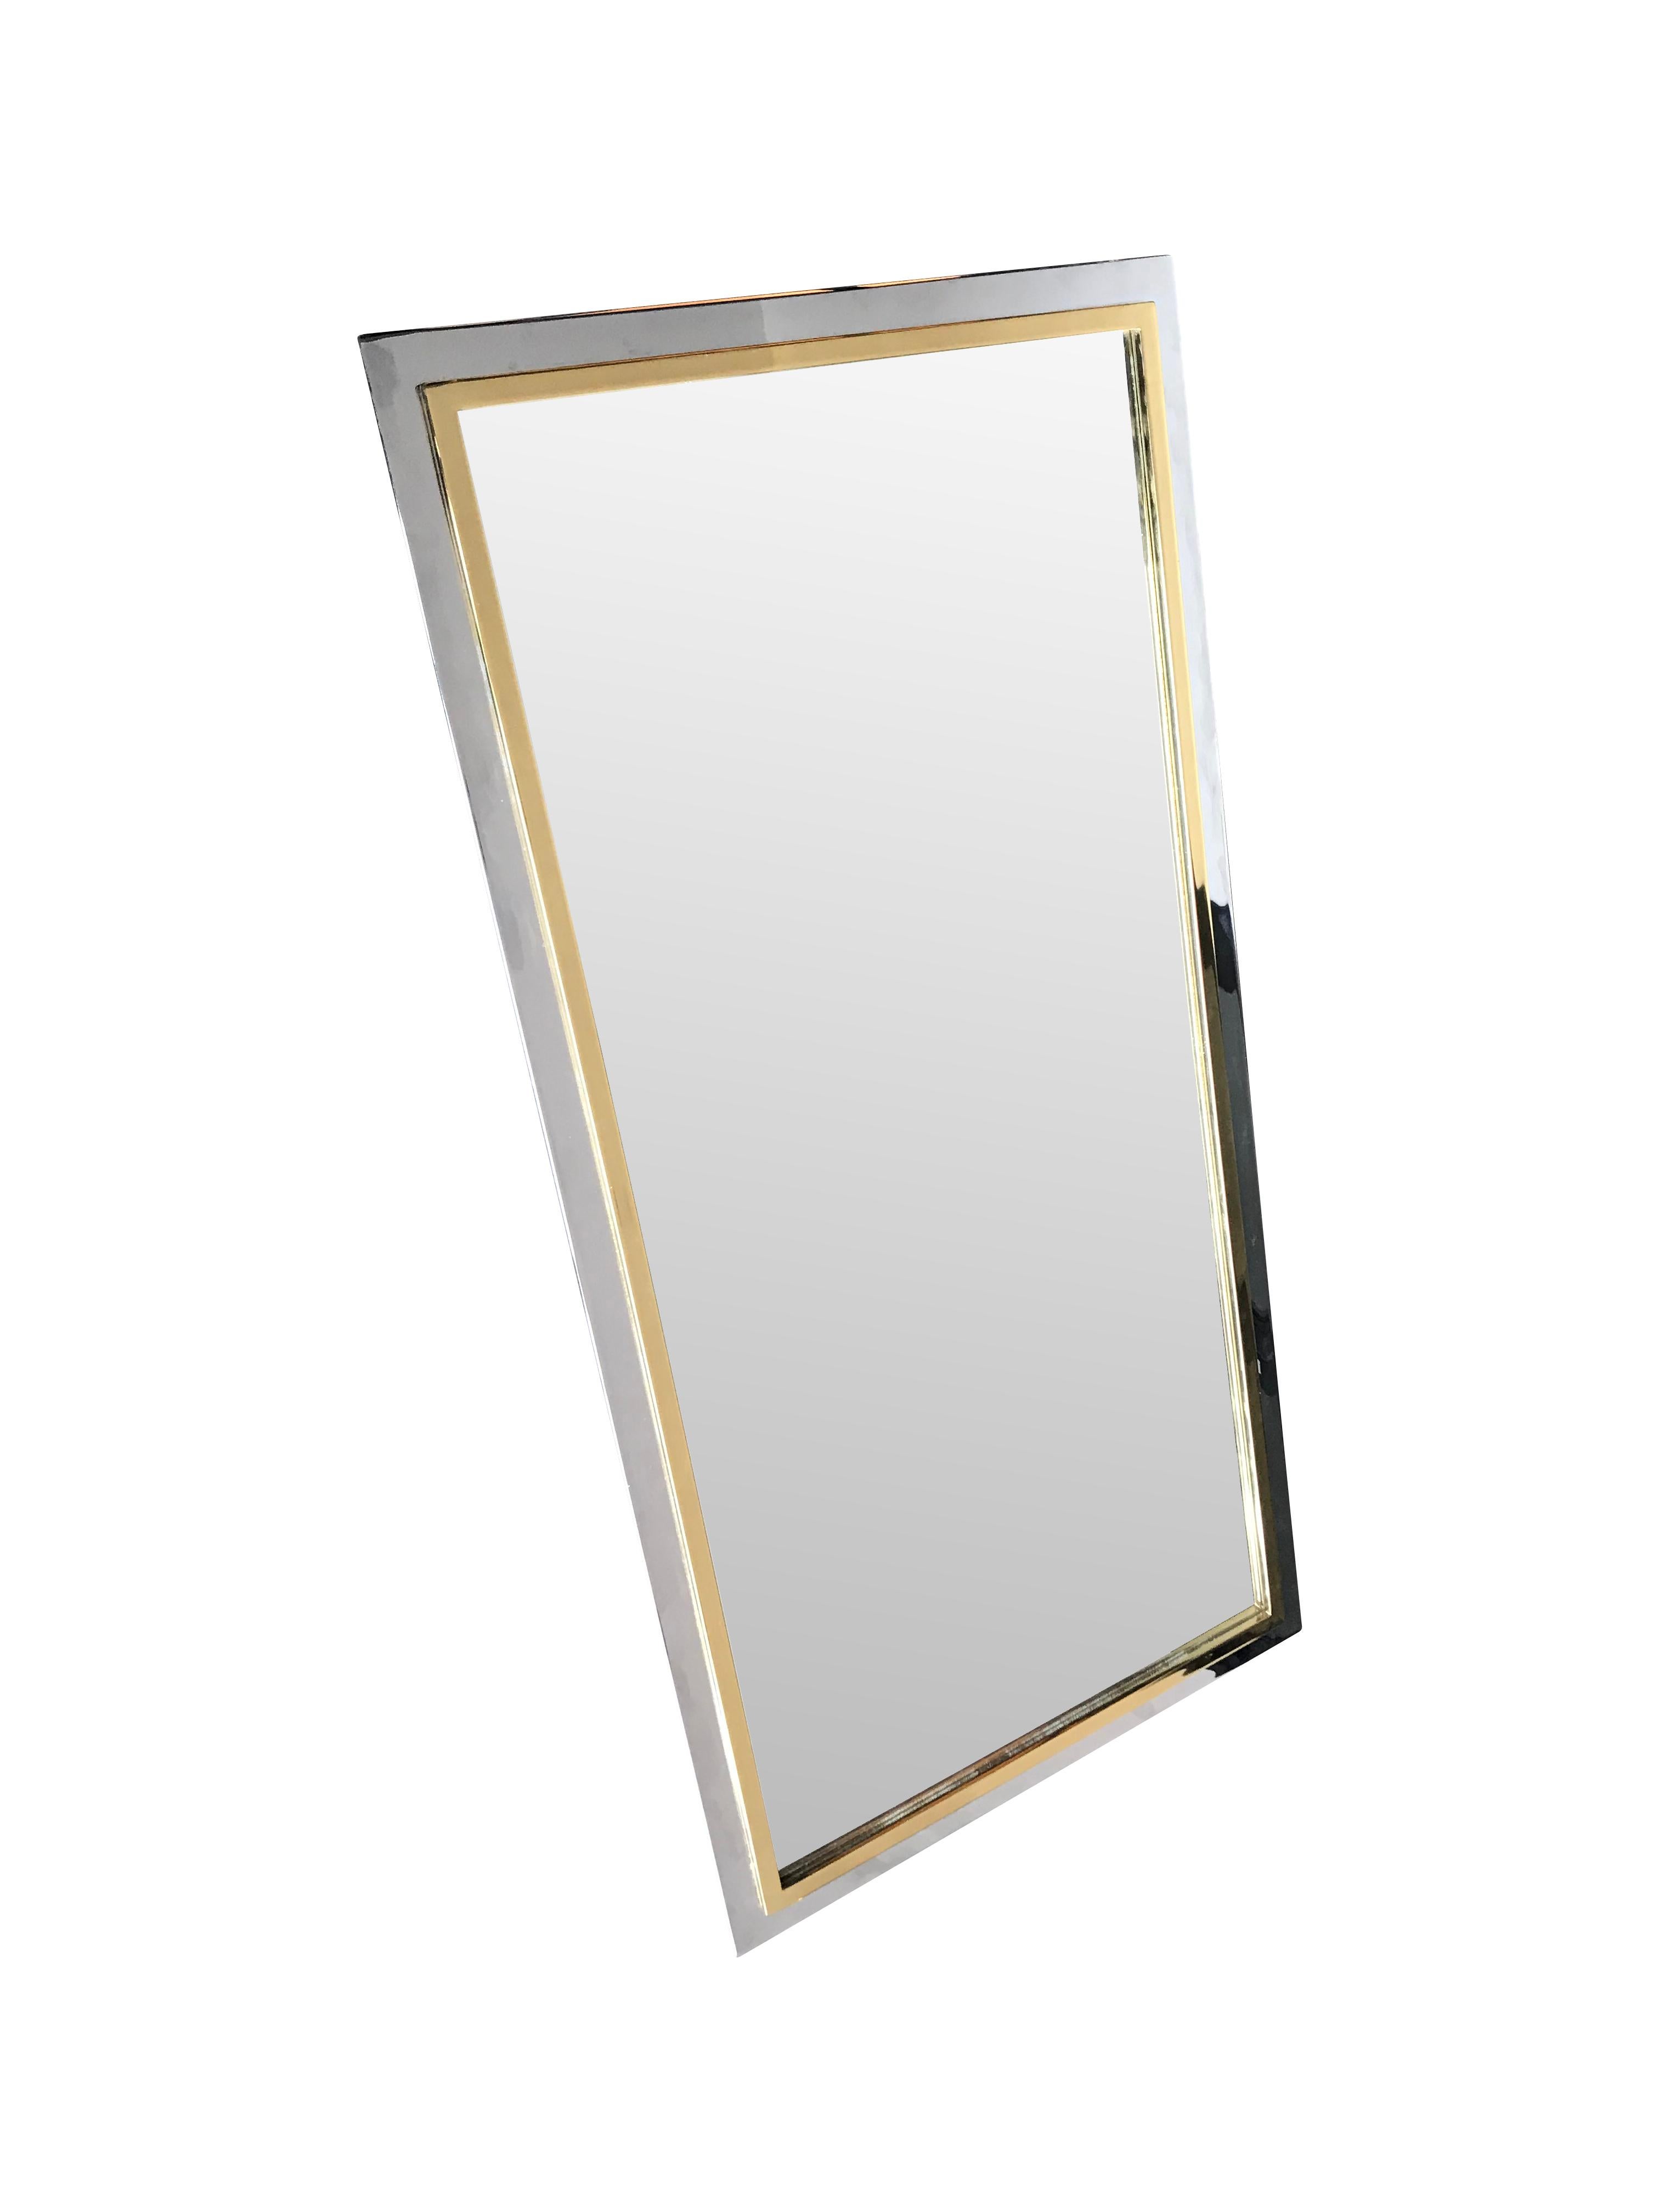 mirror with chrome frame